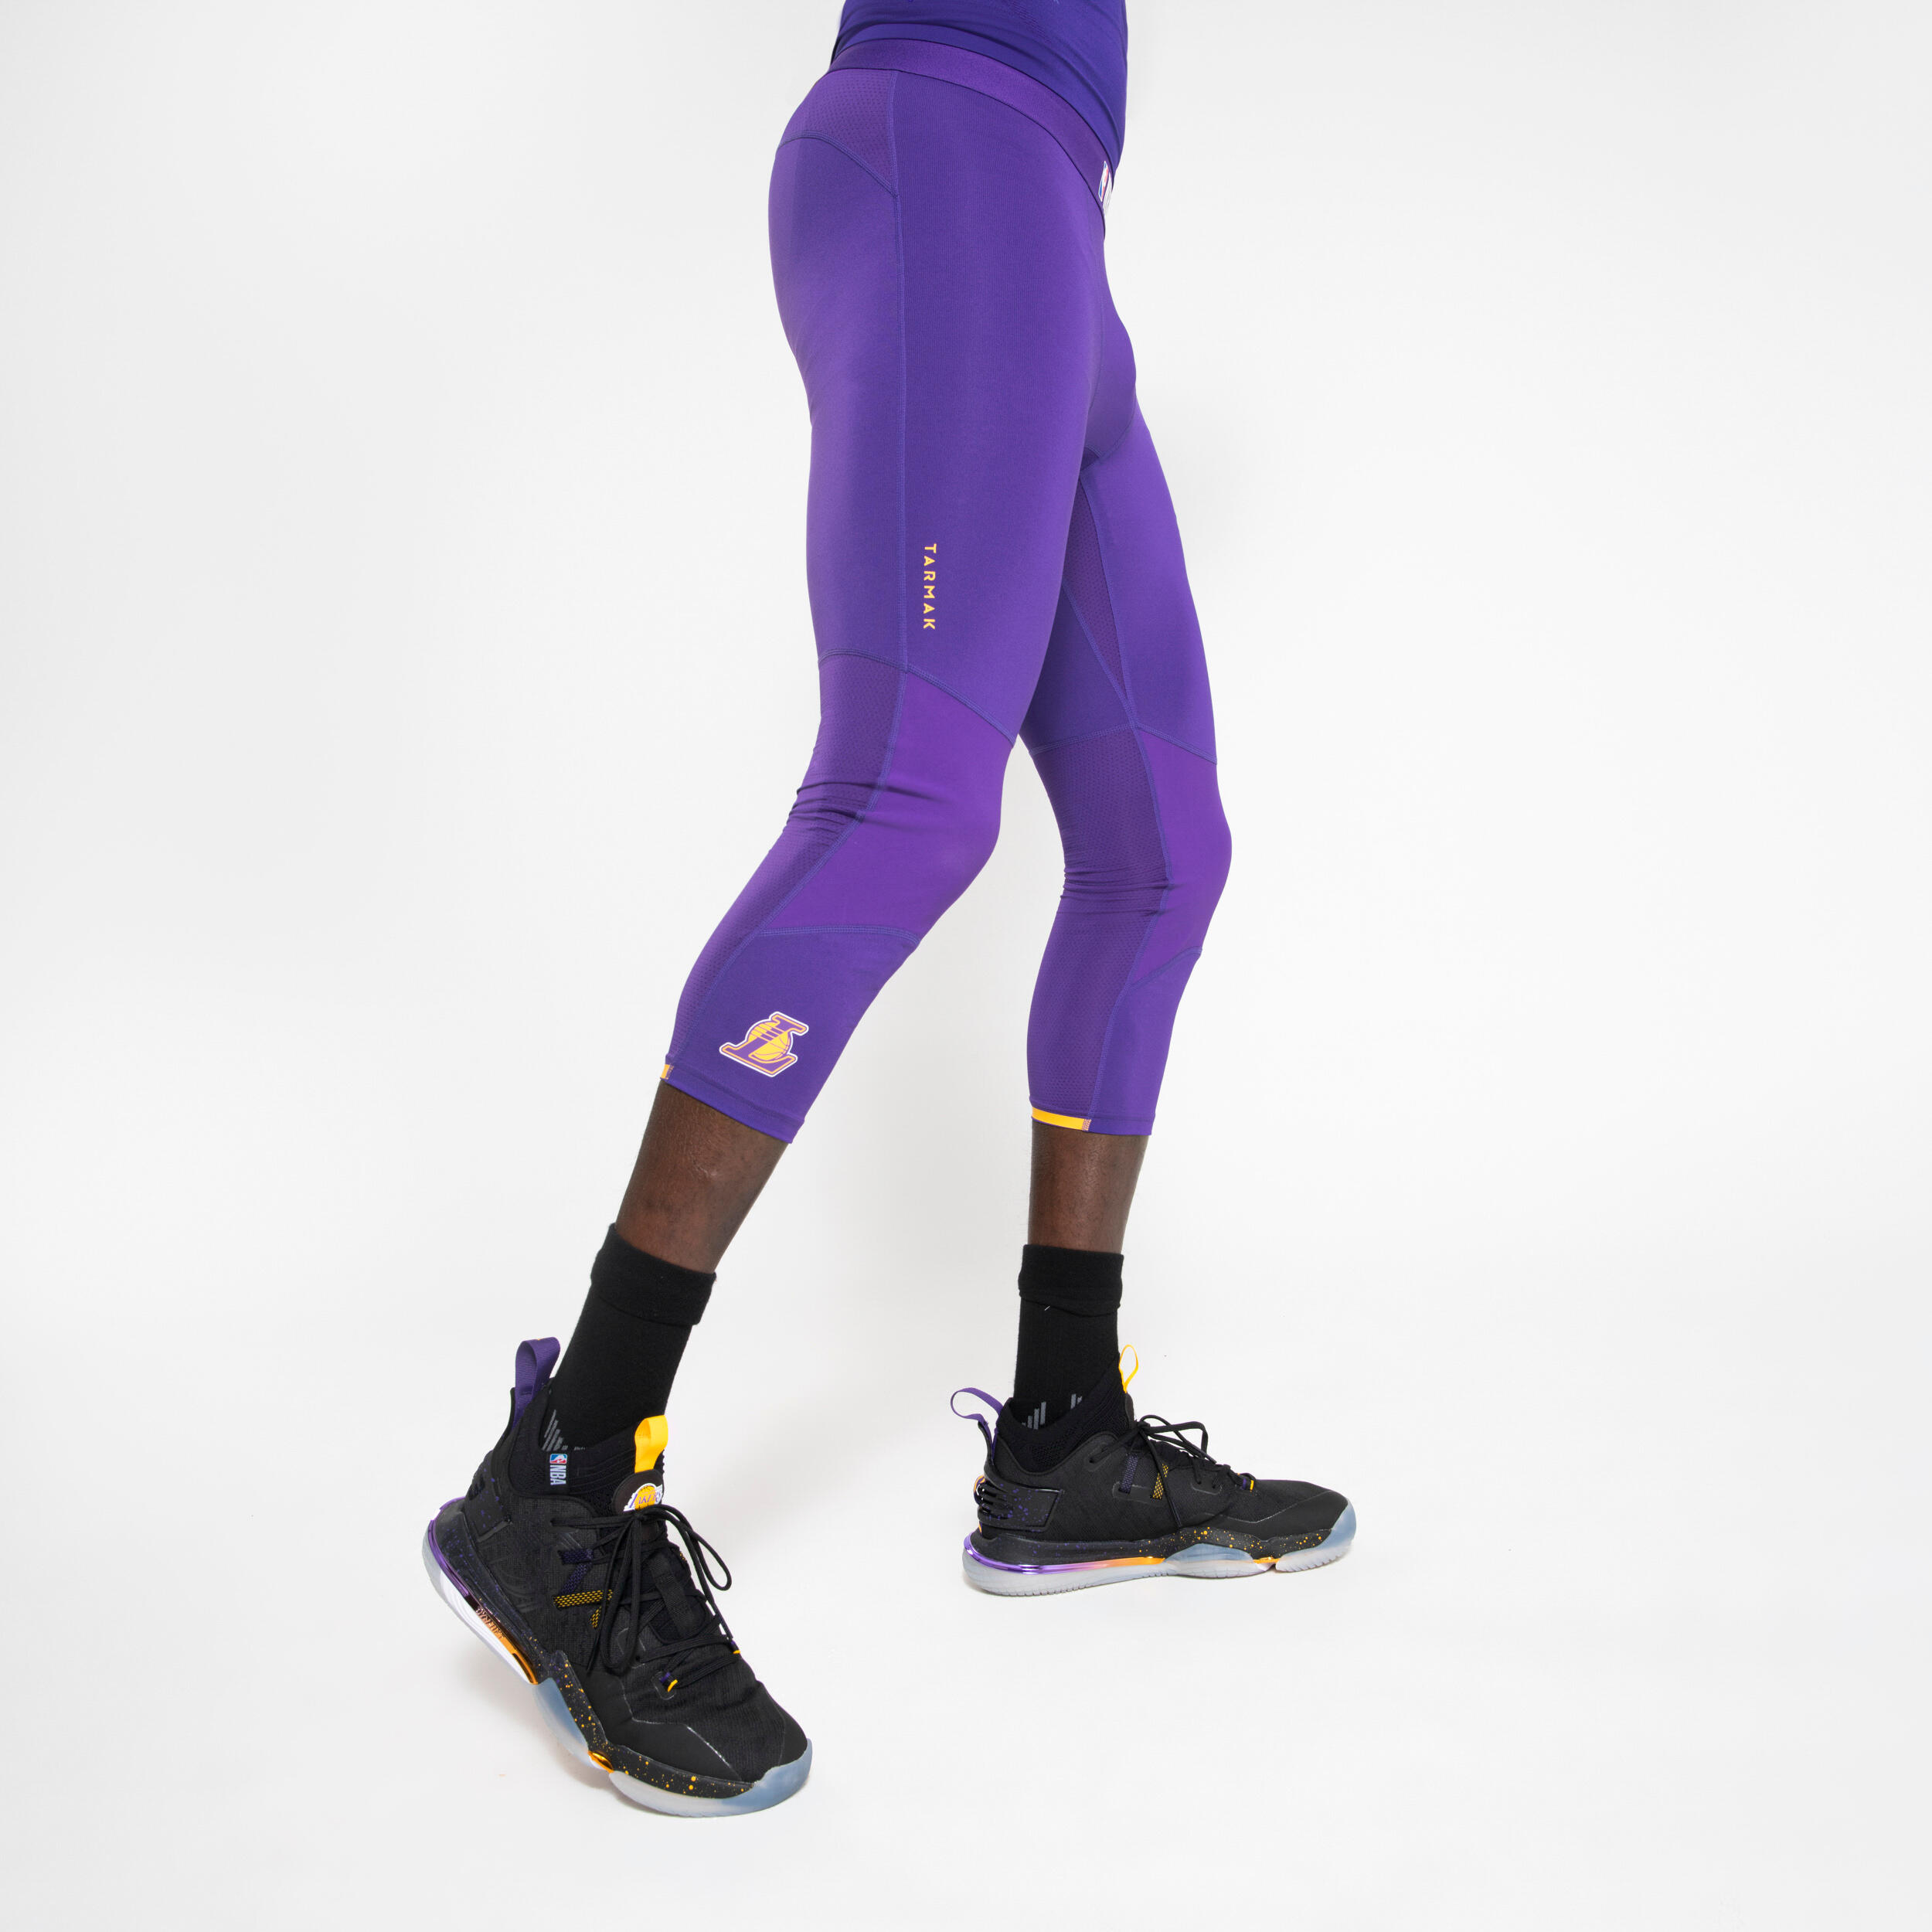 Domyos 500, Fitness Cardio Training Leggings, Women's - Walmart.com